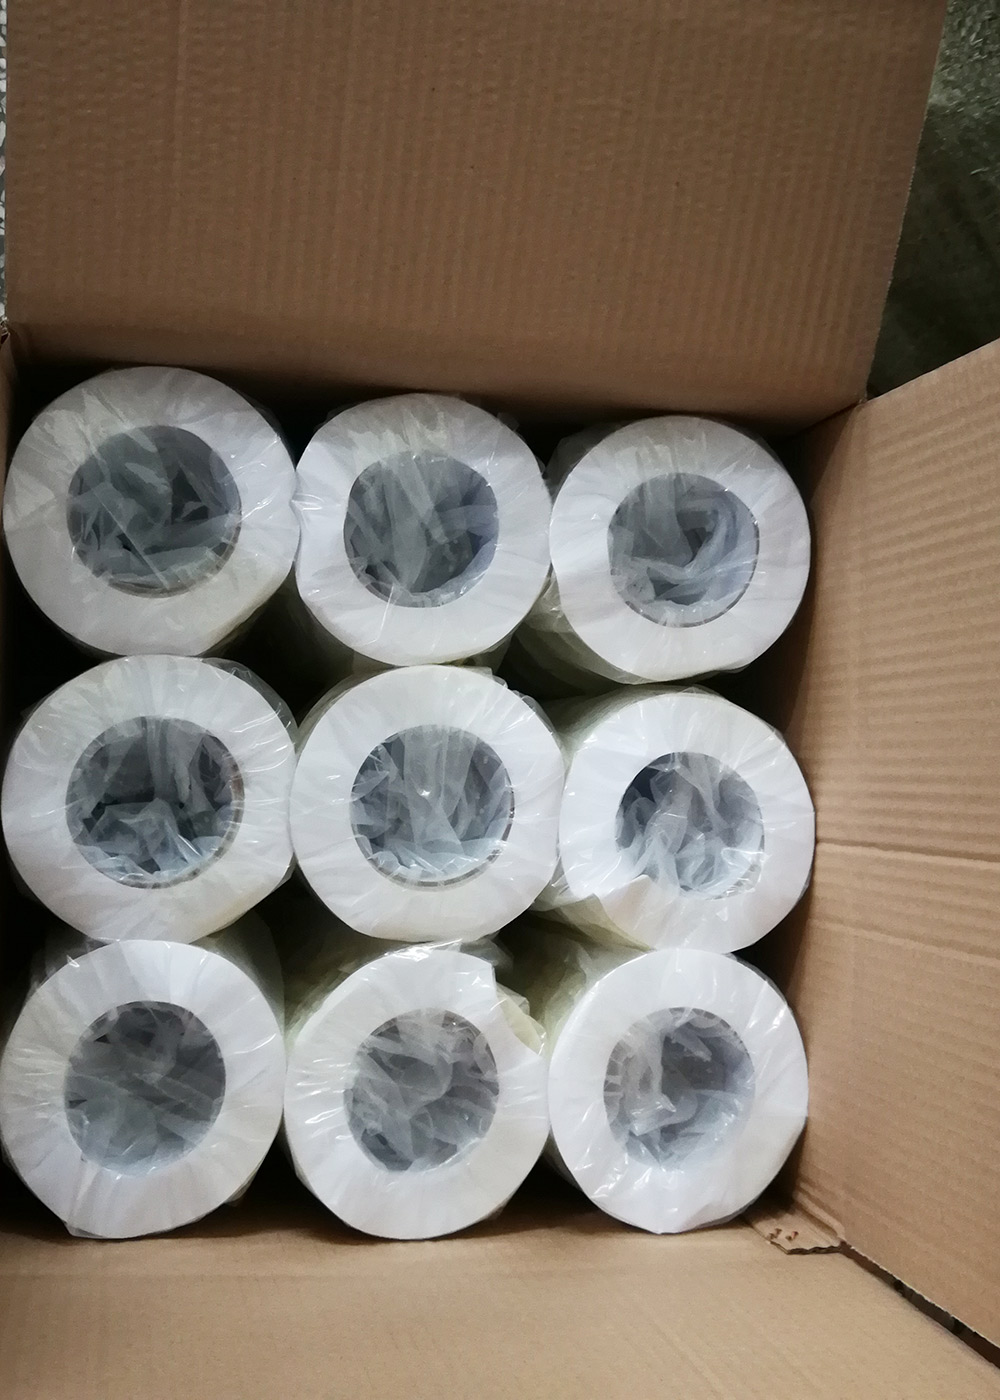 Package of bi-directional filament tape